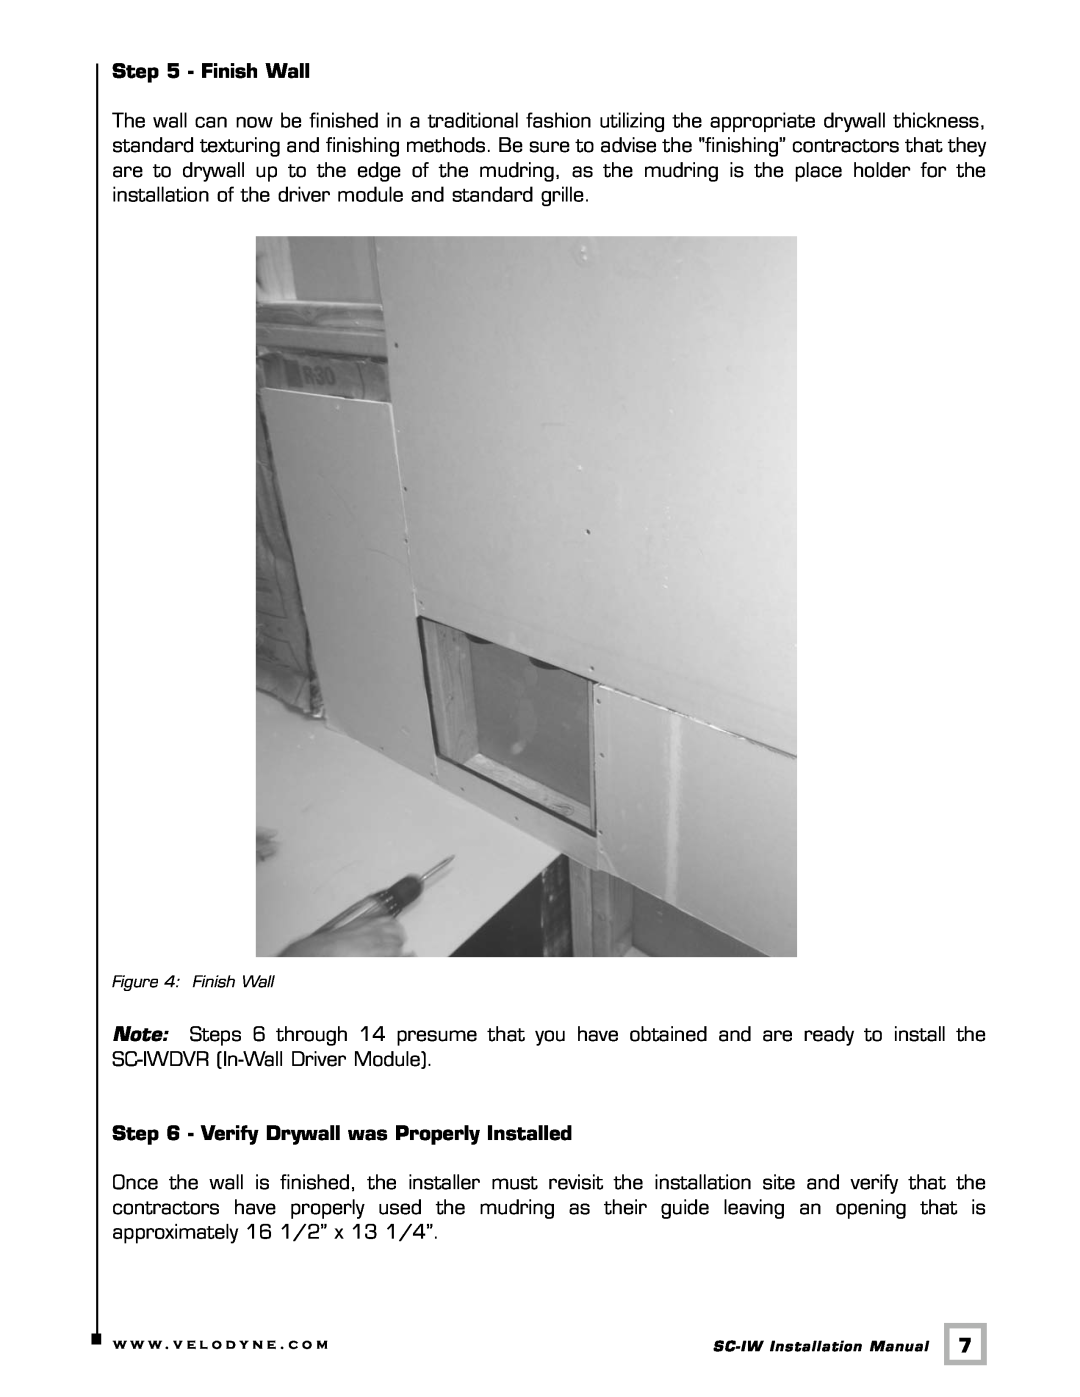 Velodyne Acoustics SC-IW installation manual Finish Wall, Verify Drywall was Properly Installed 